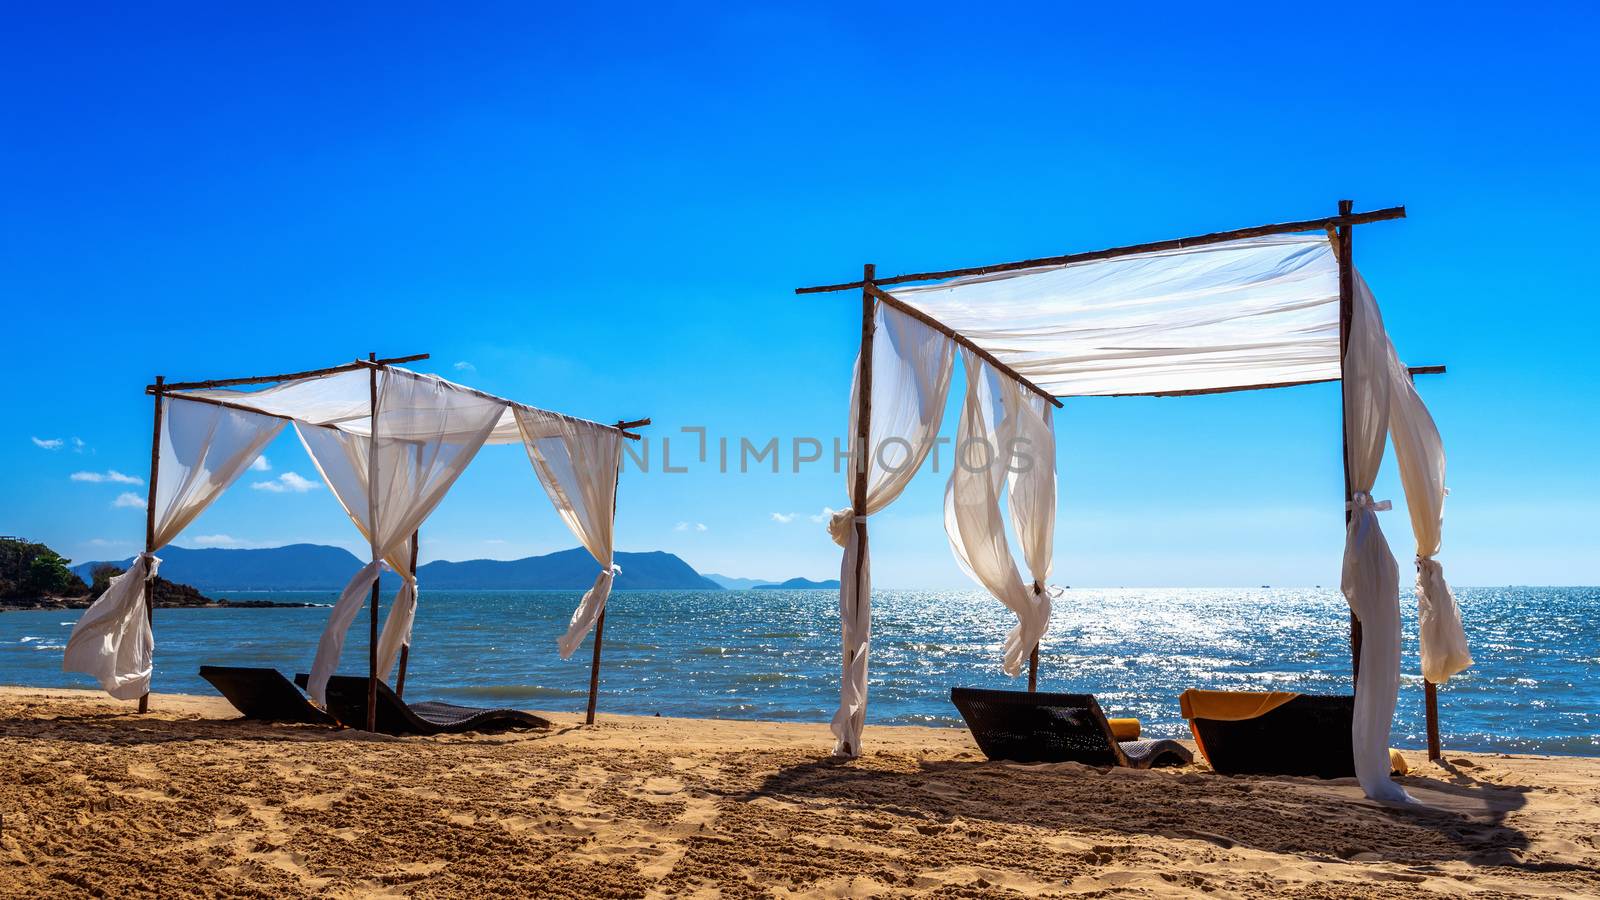 Beach canopies with sun loungers on beach. by gutarphotoghaphy